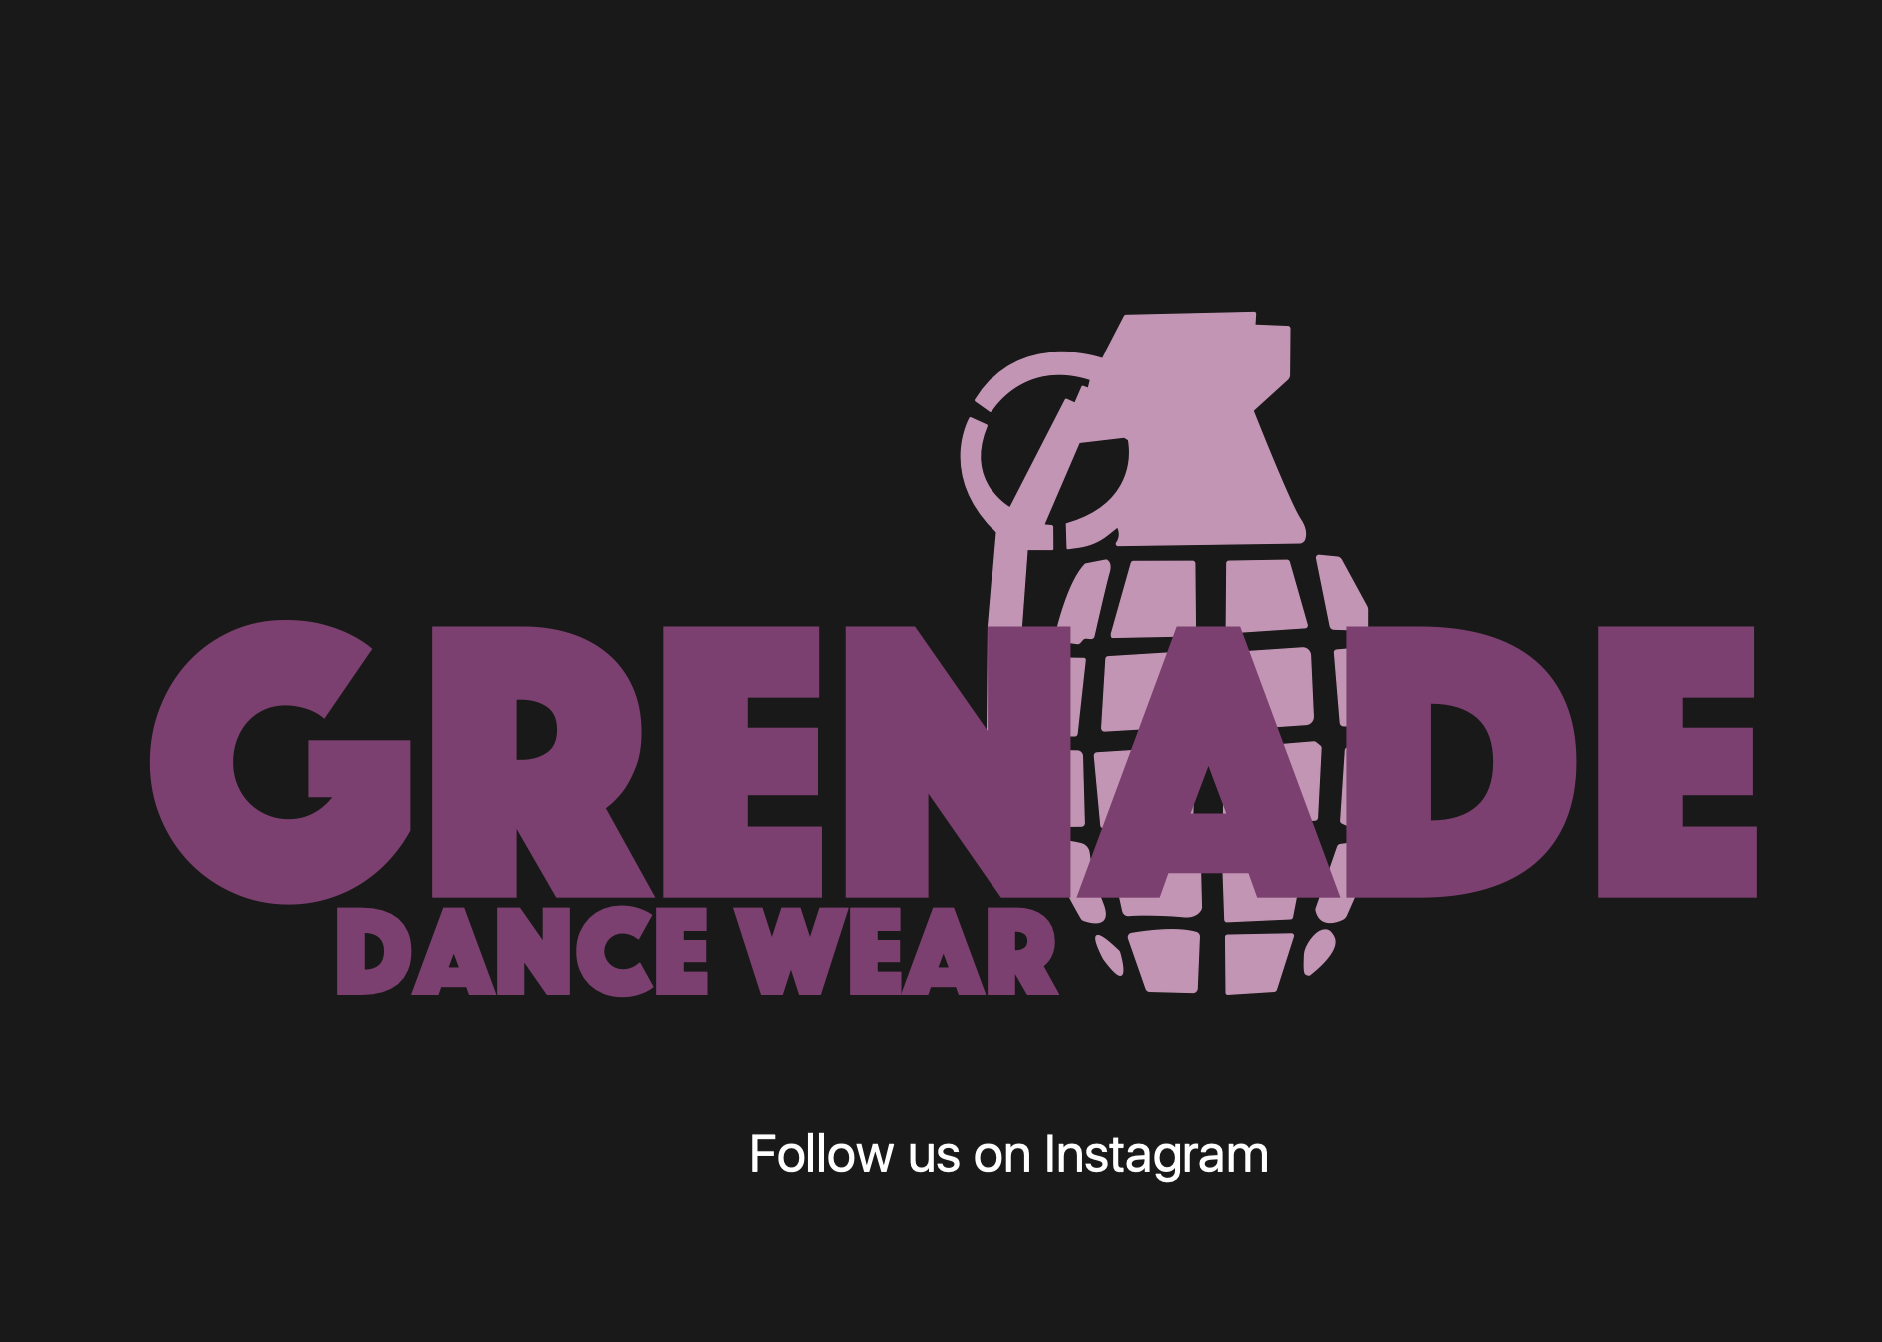 Grenade Dancewear logo with text "follow us on Instagram"